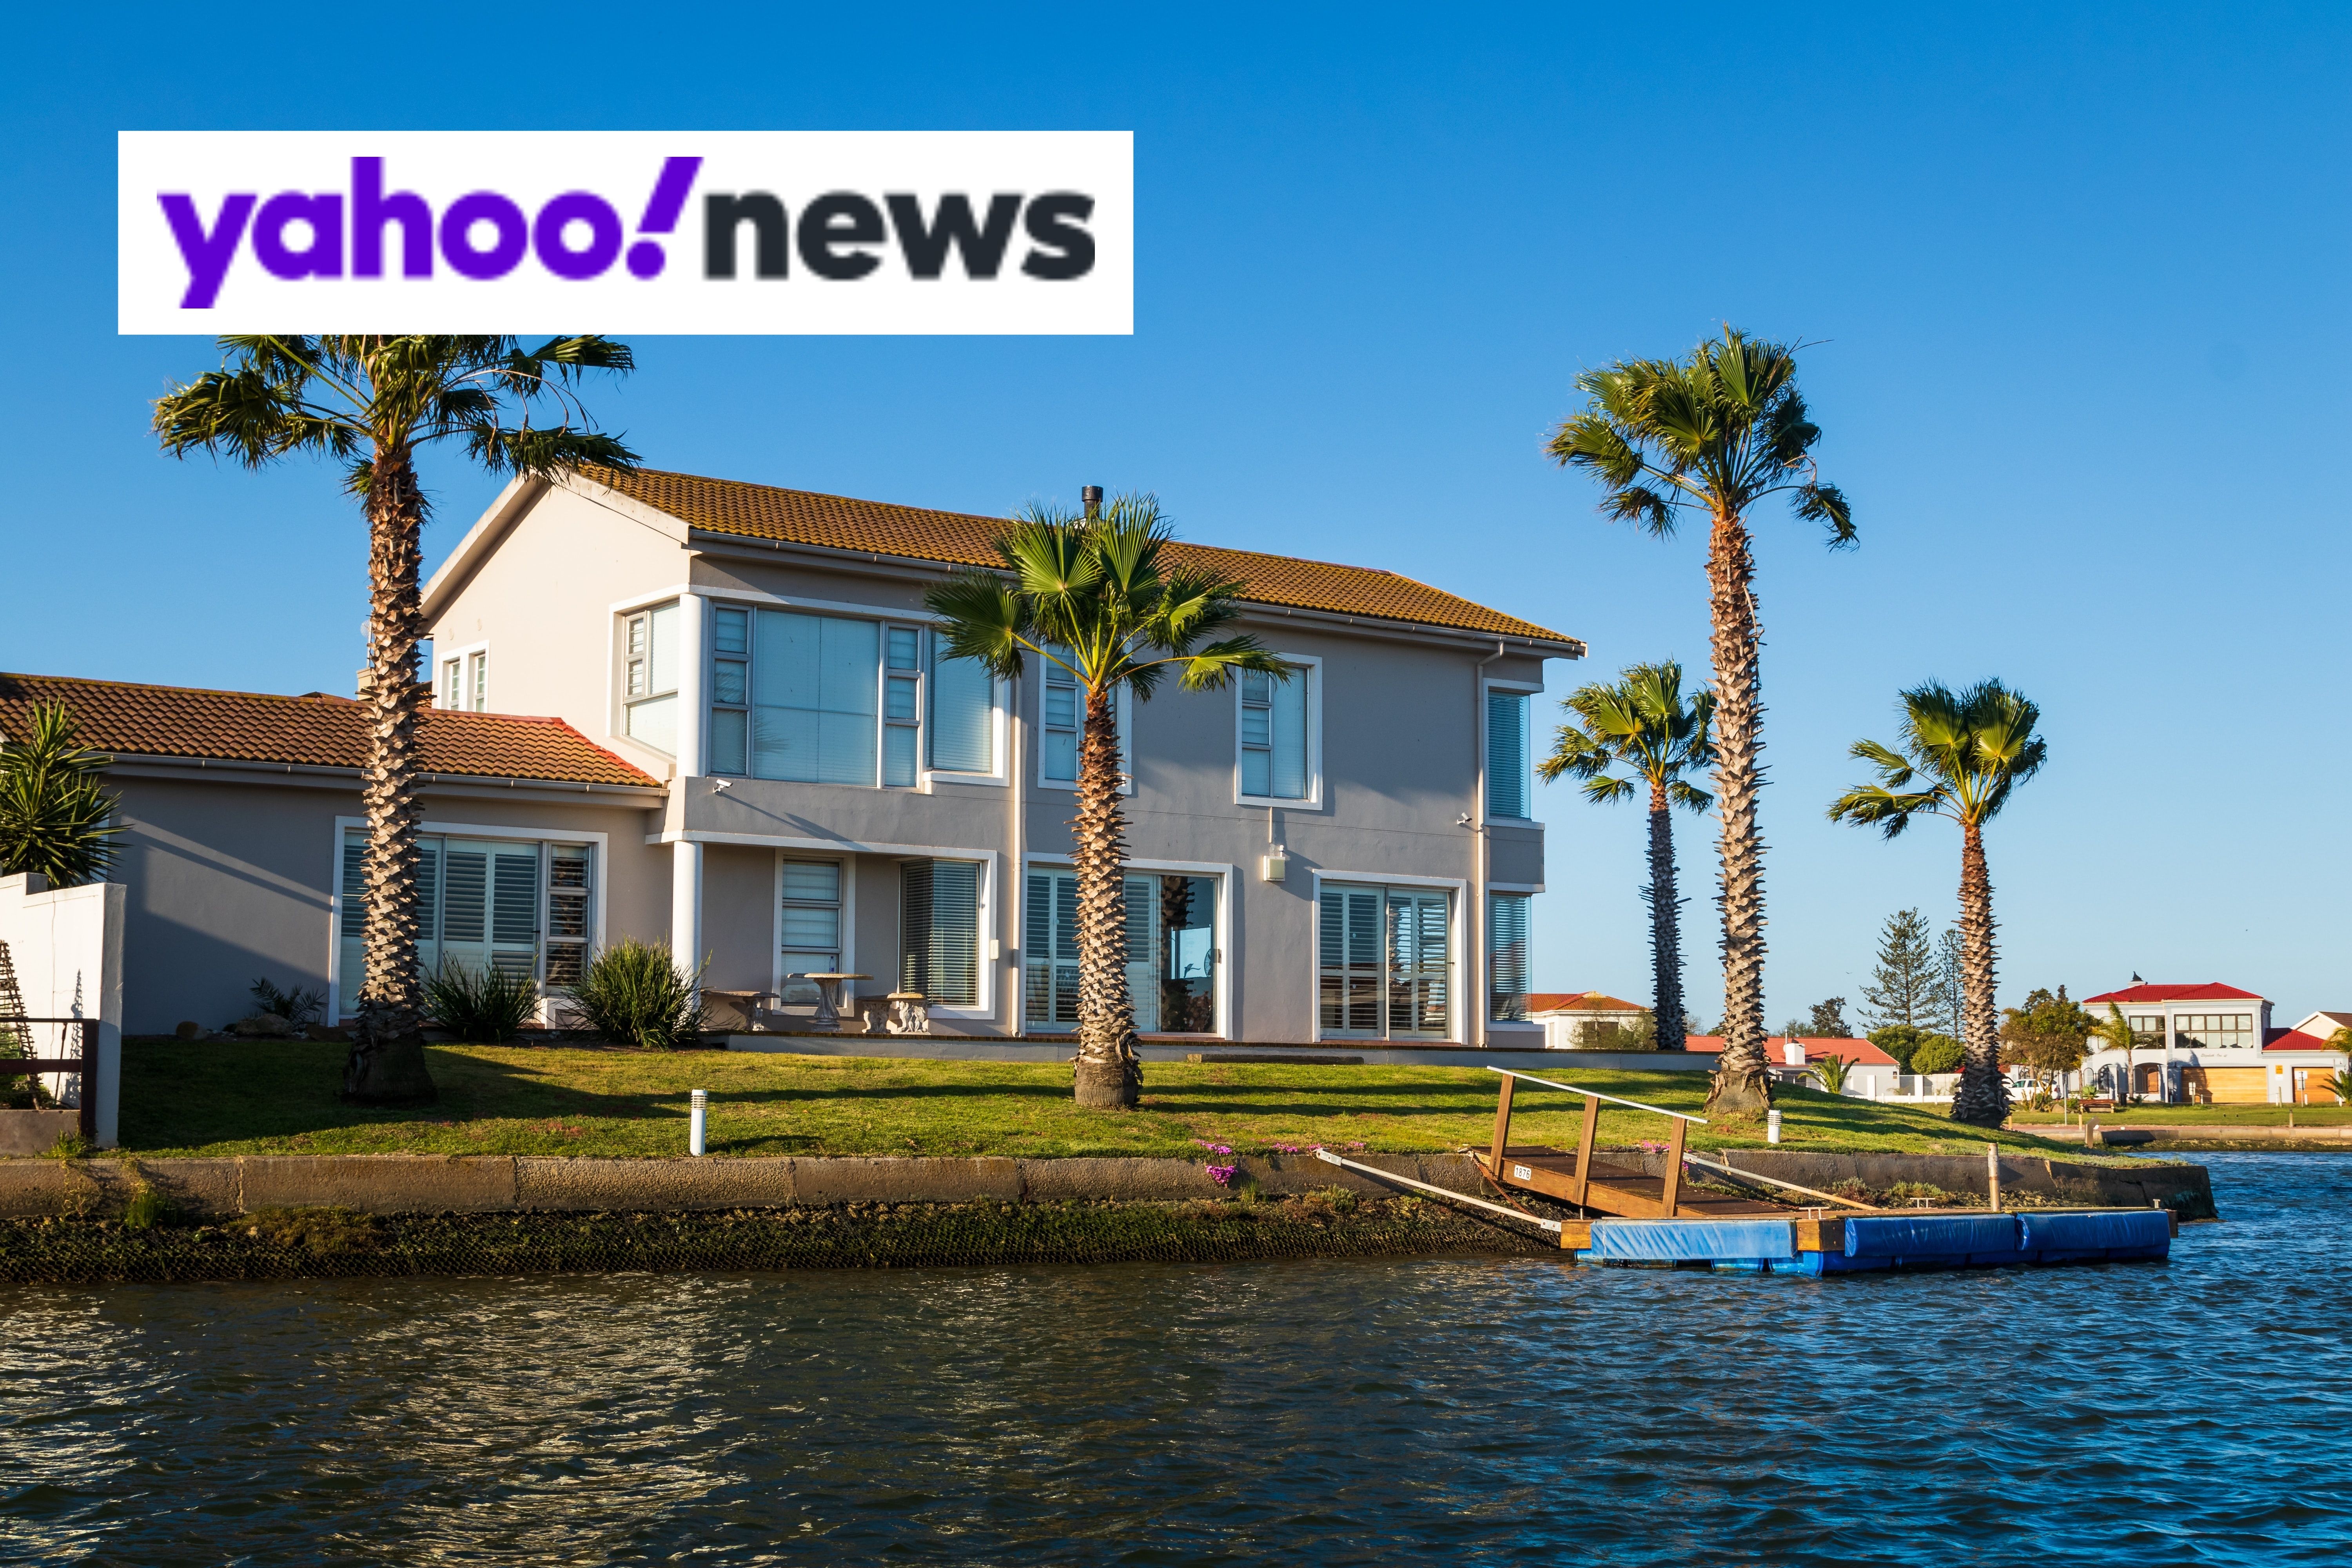 Hostaway Provides Vacation Rental Trends On Yahoo News!